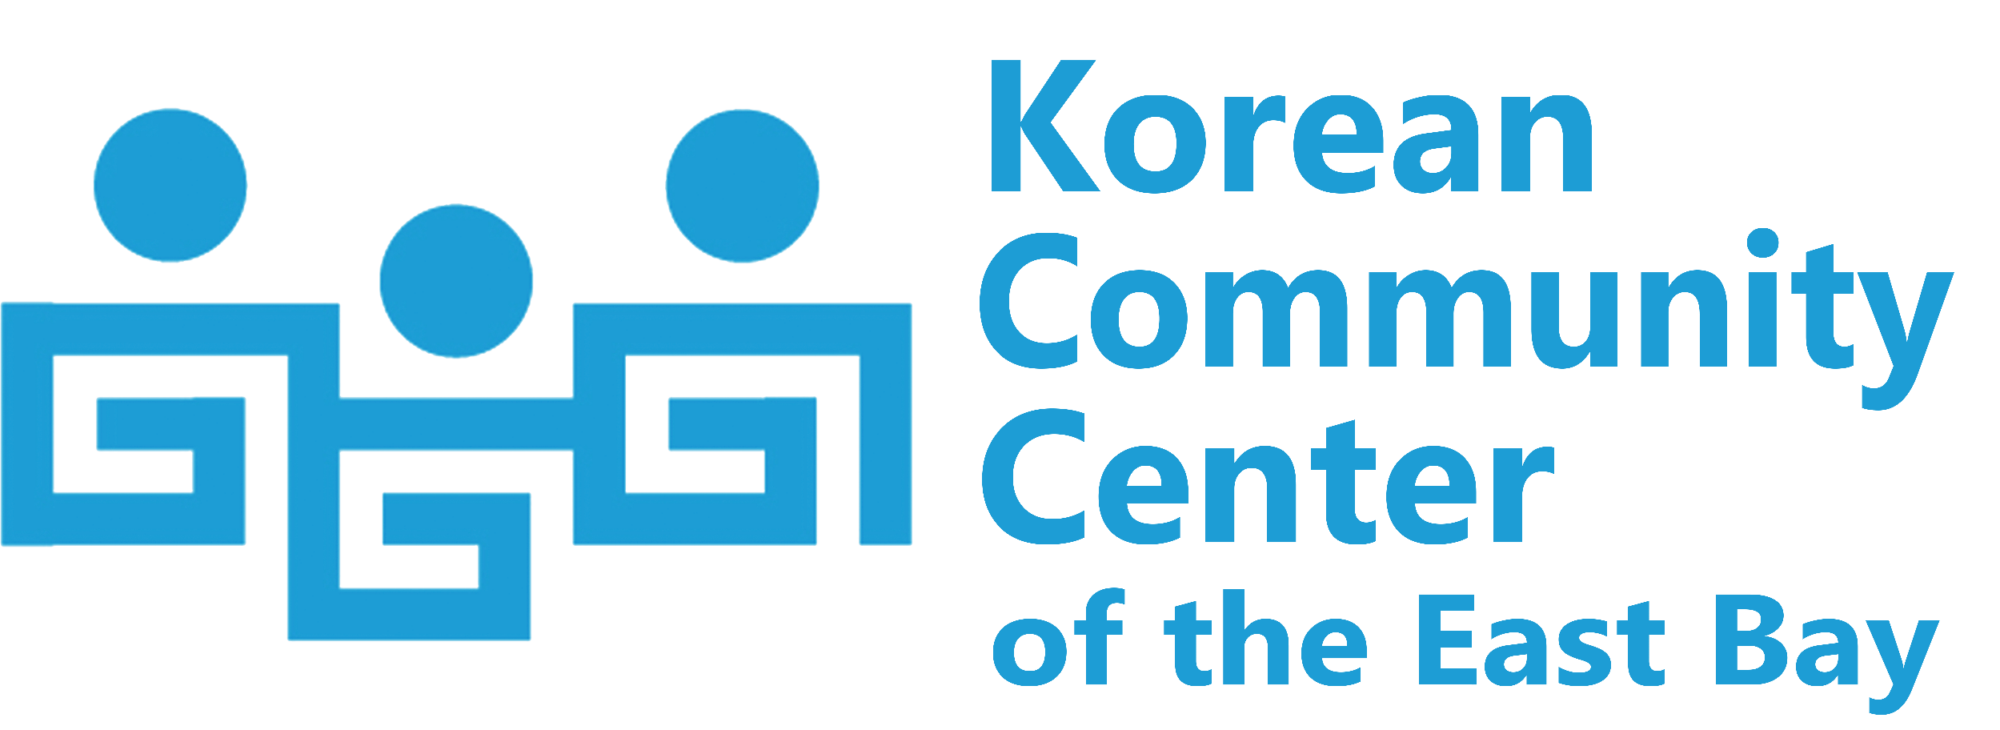 Asian Community Wellness Program – North Alameda County (Korean Community Center of the East Bay)